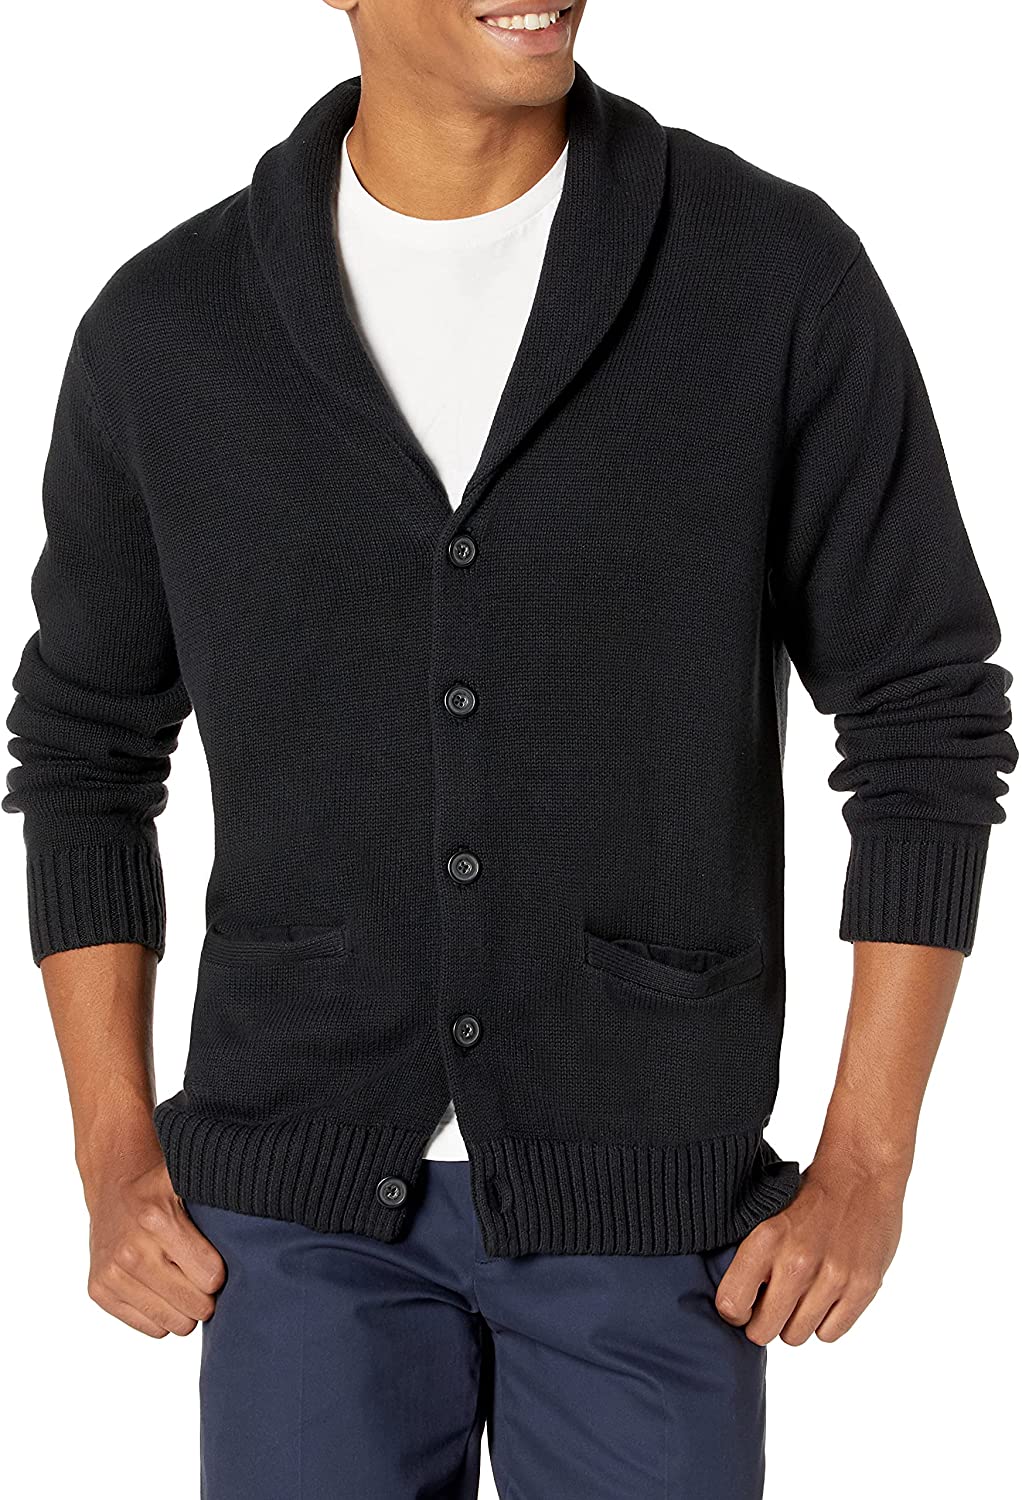 Brand Goodthreads Mens Soft Cotton Shawl Cardigan Sweater 